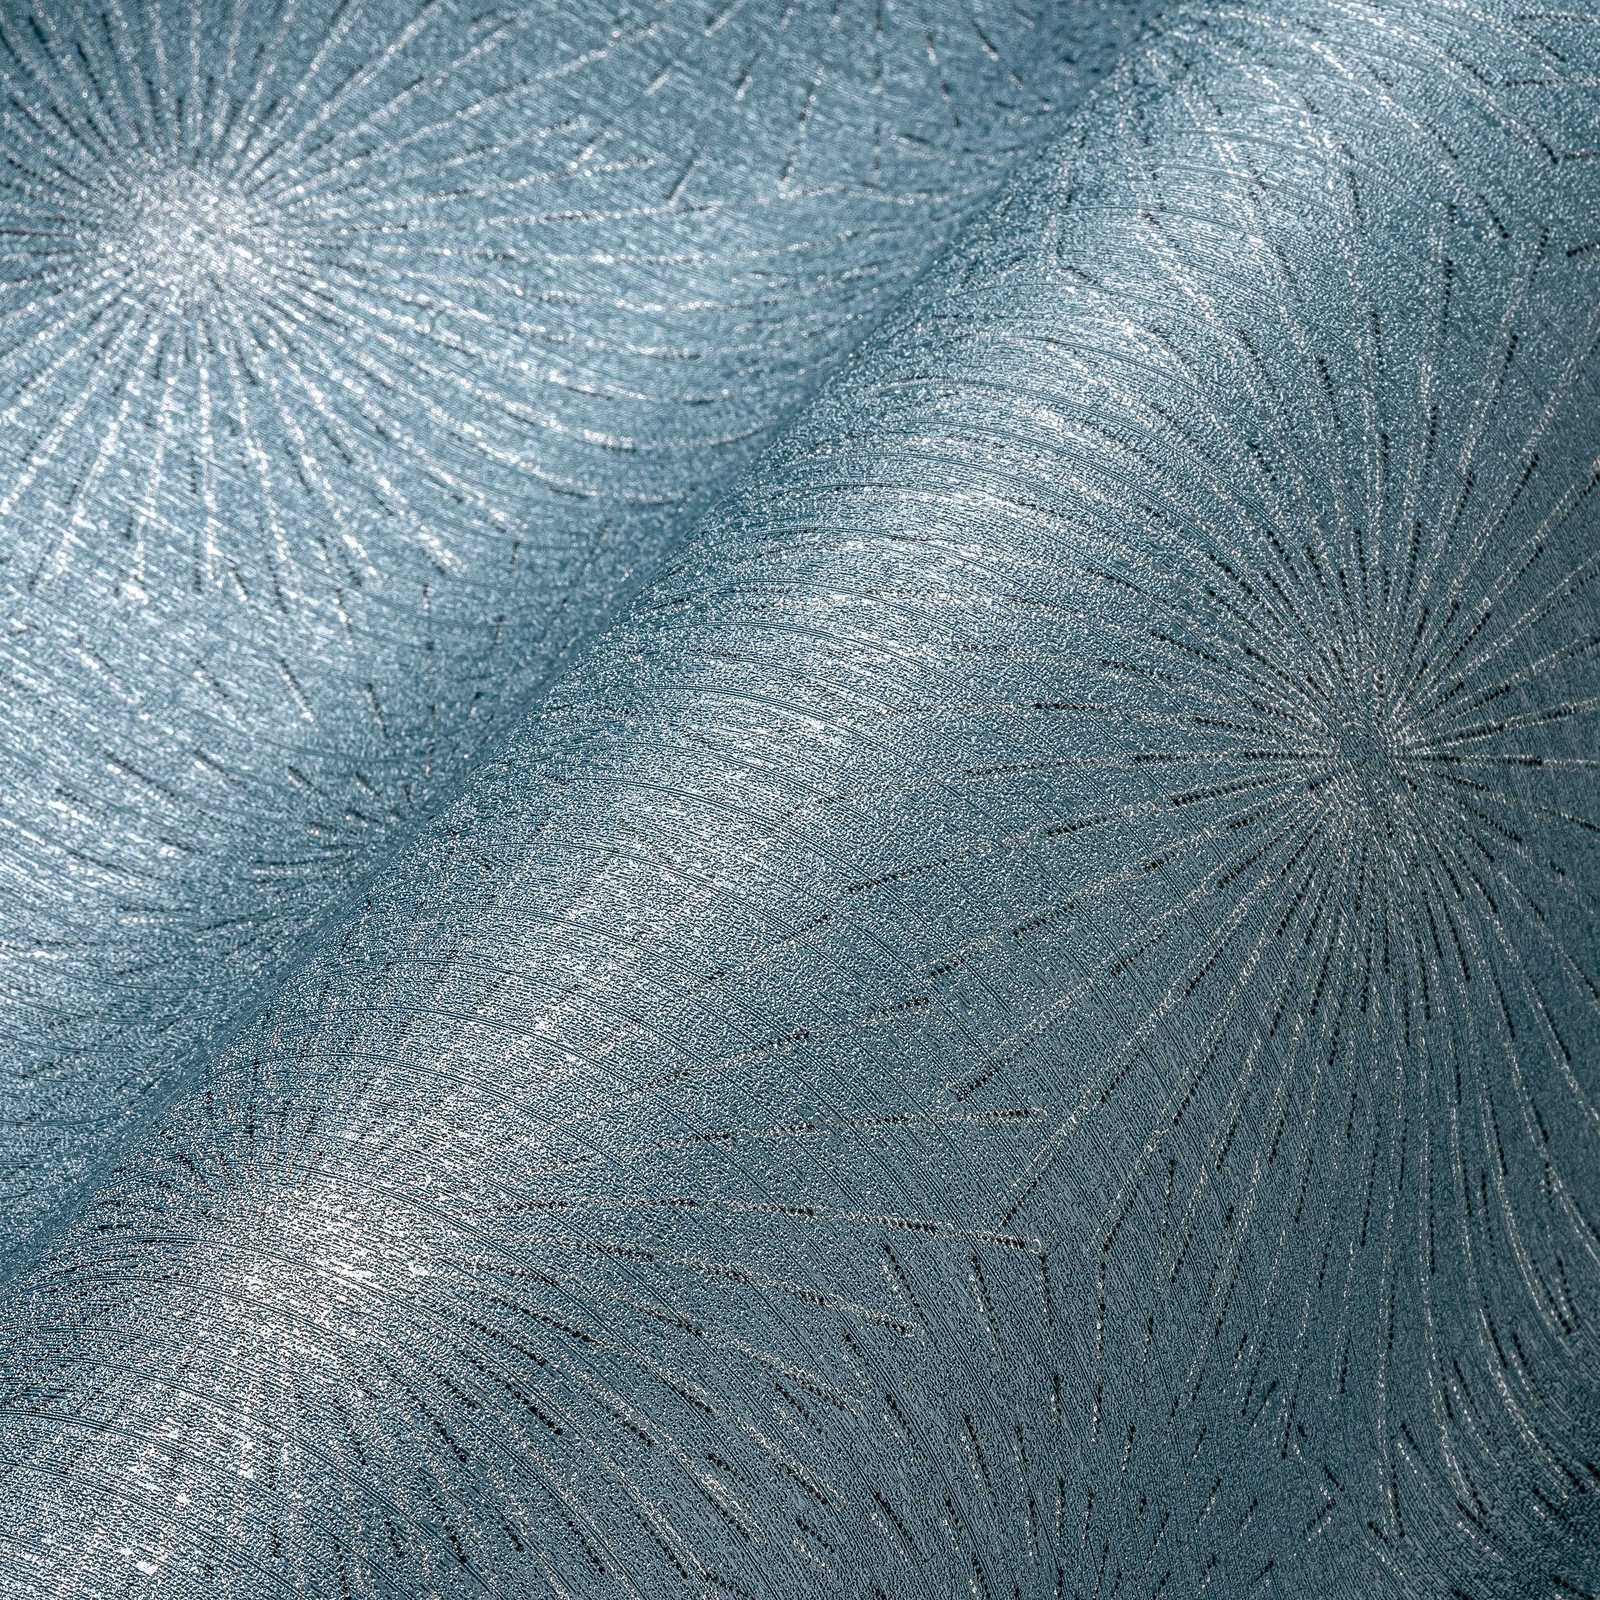             papel pintado diseño retro starburst - azul, metálico
        